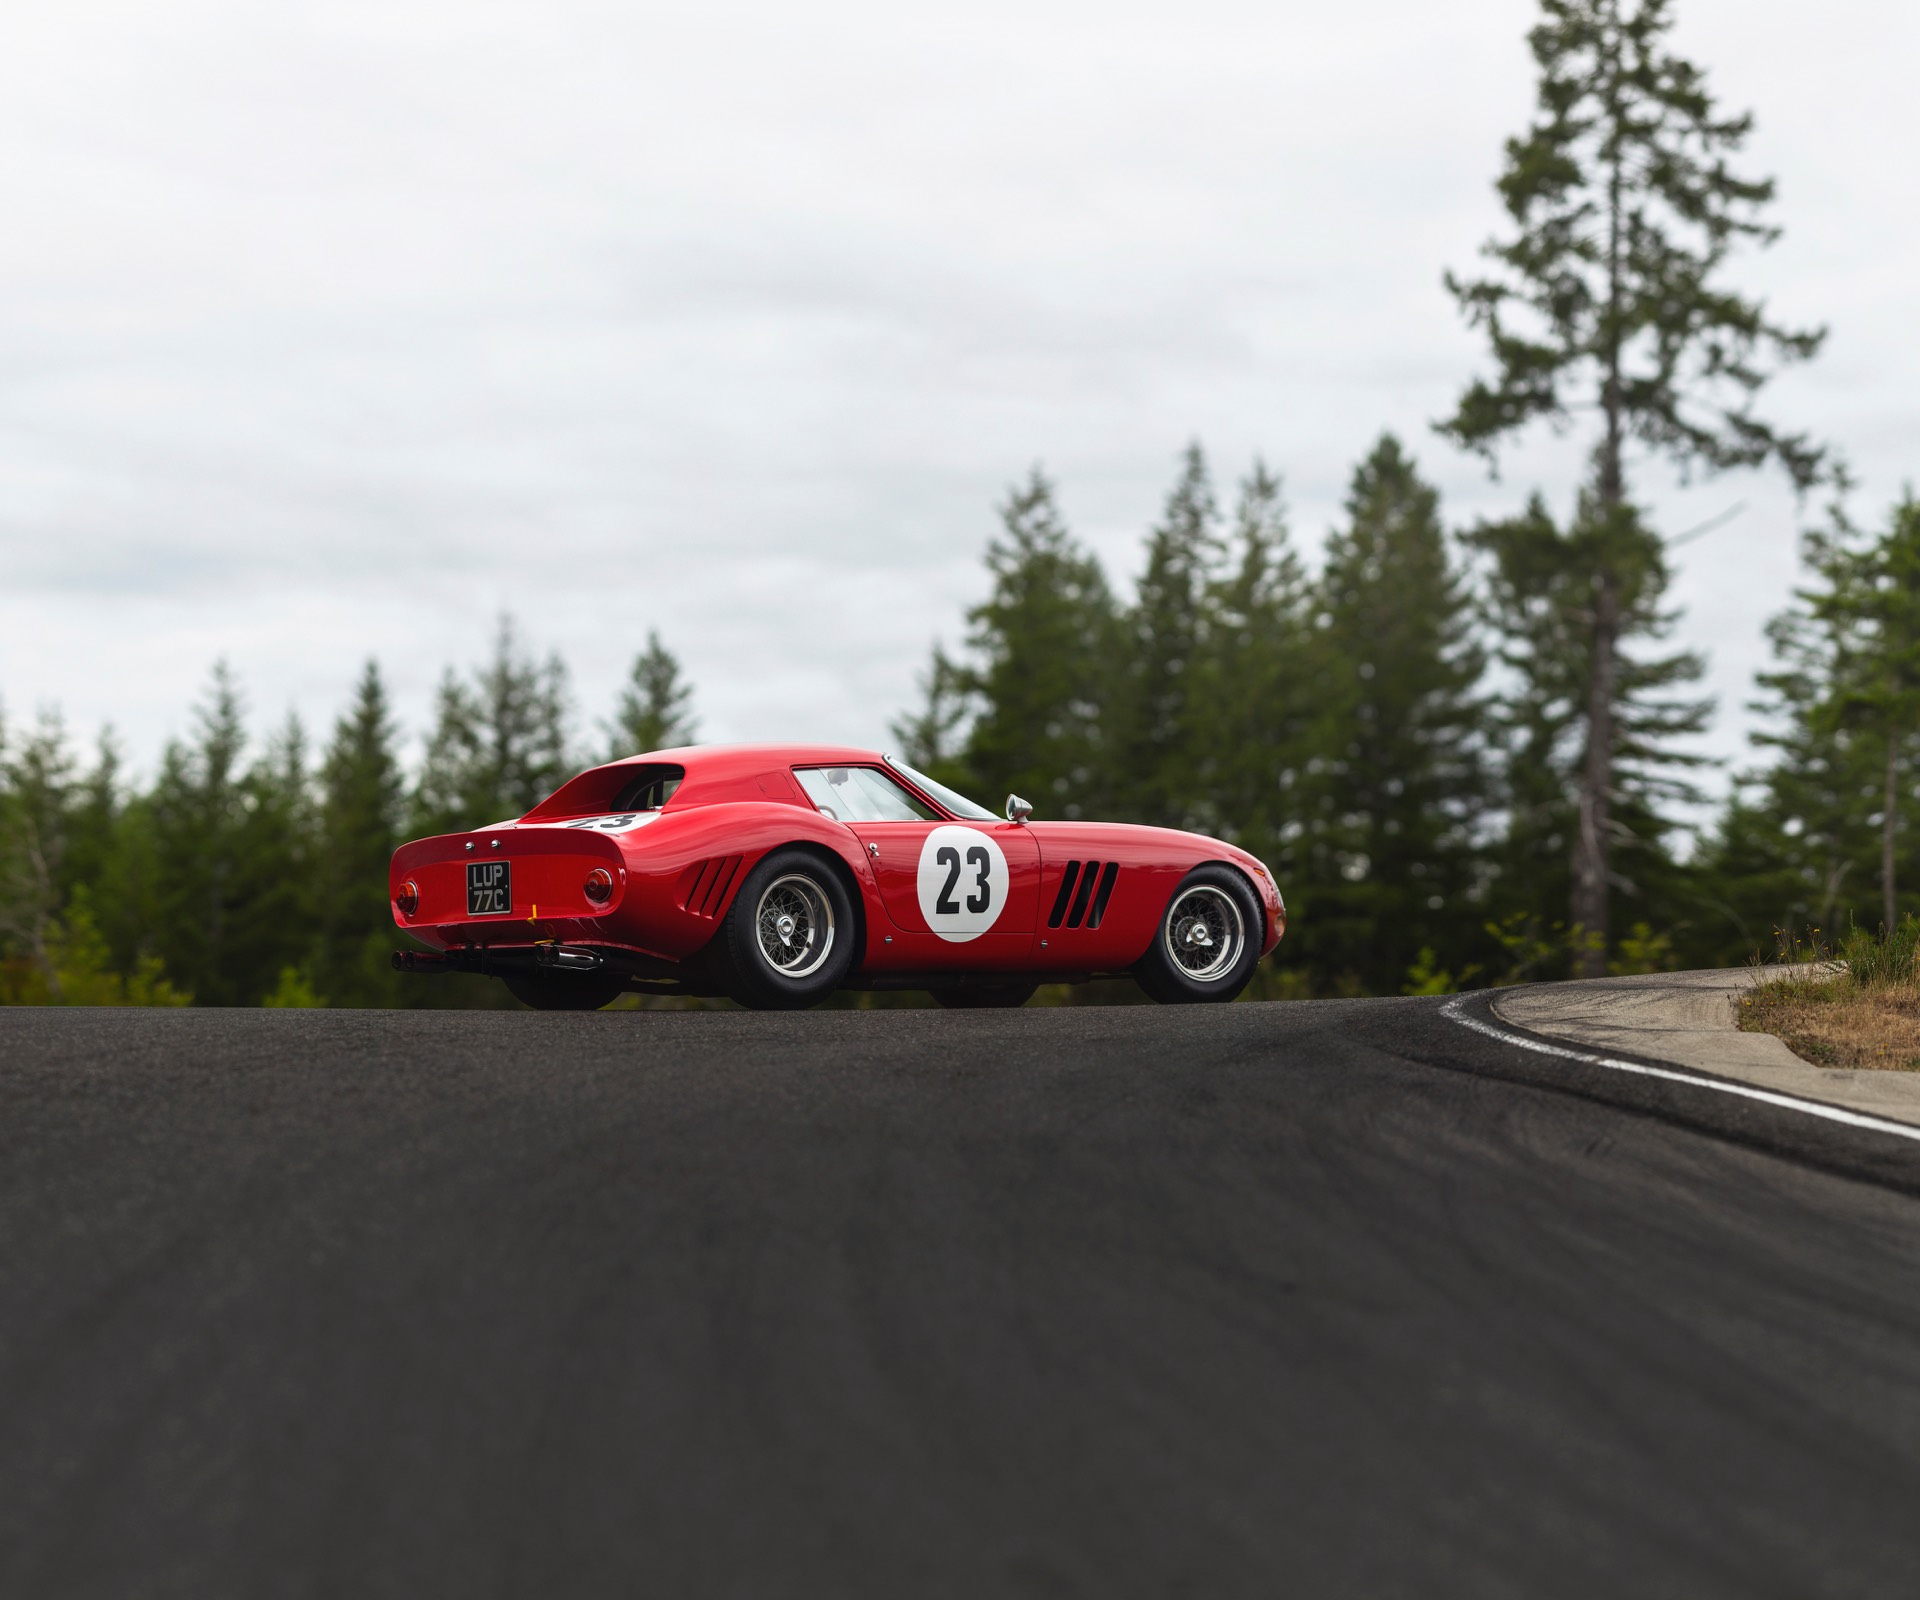 Ferrari 250 GTO RM Sothebys